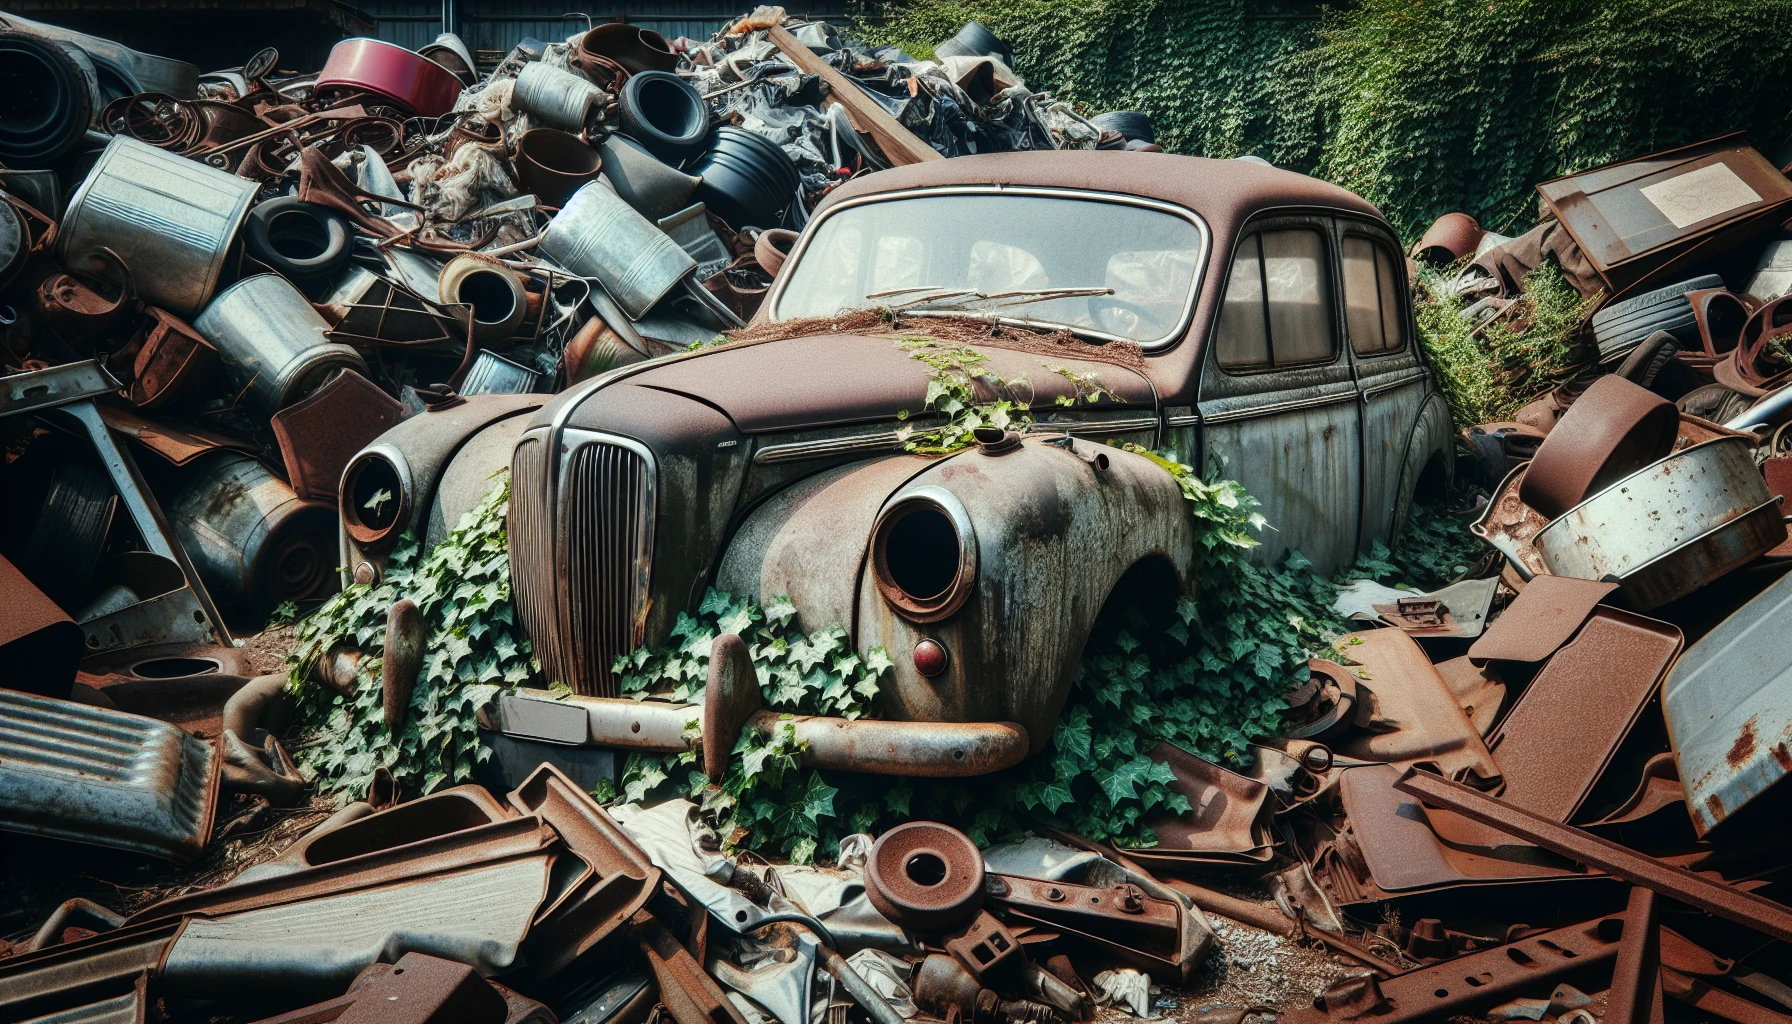 A vintage car in a junkyard